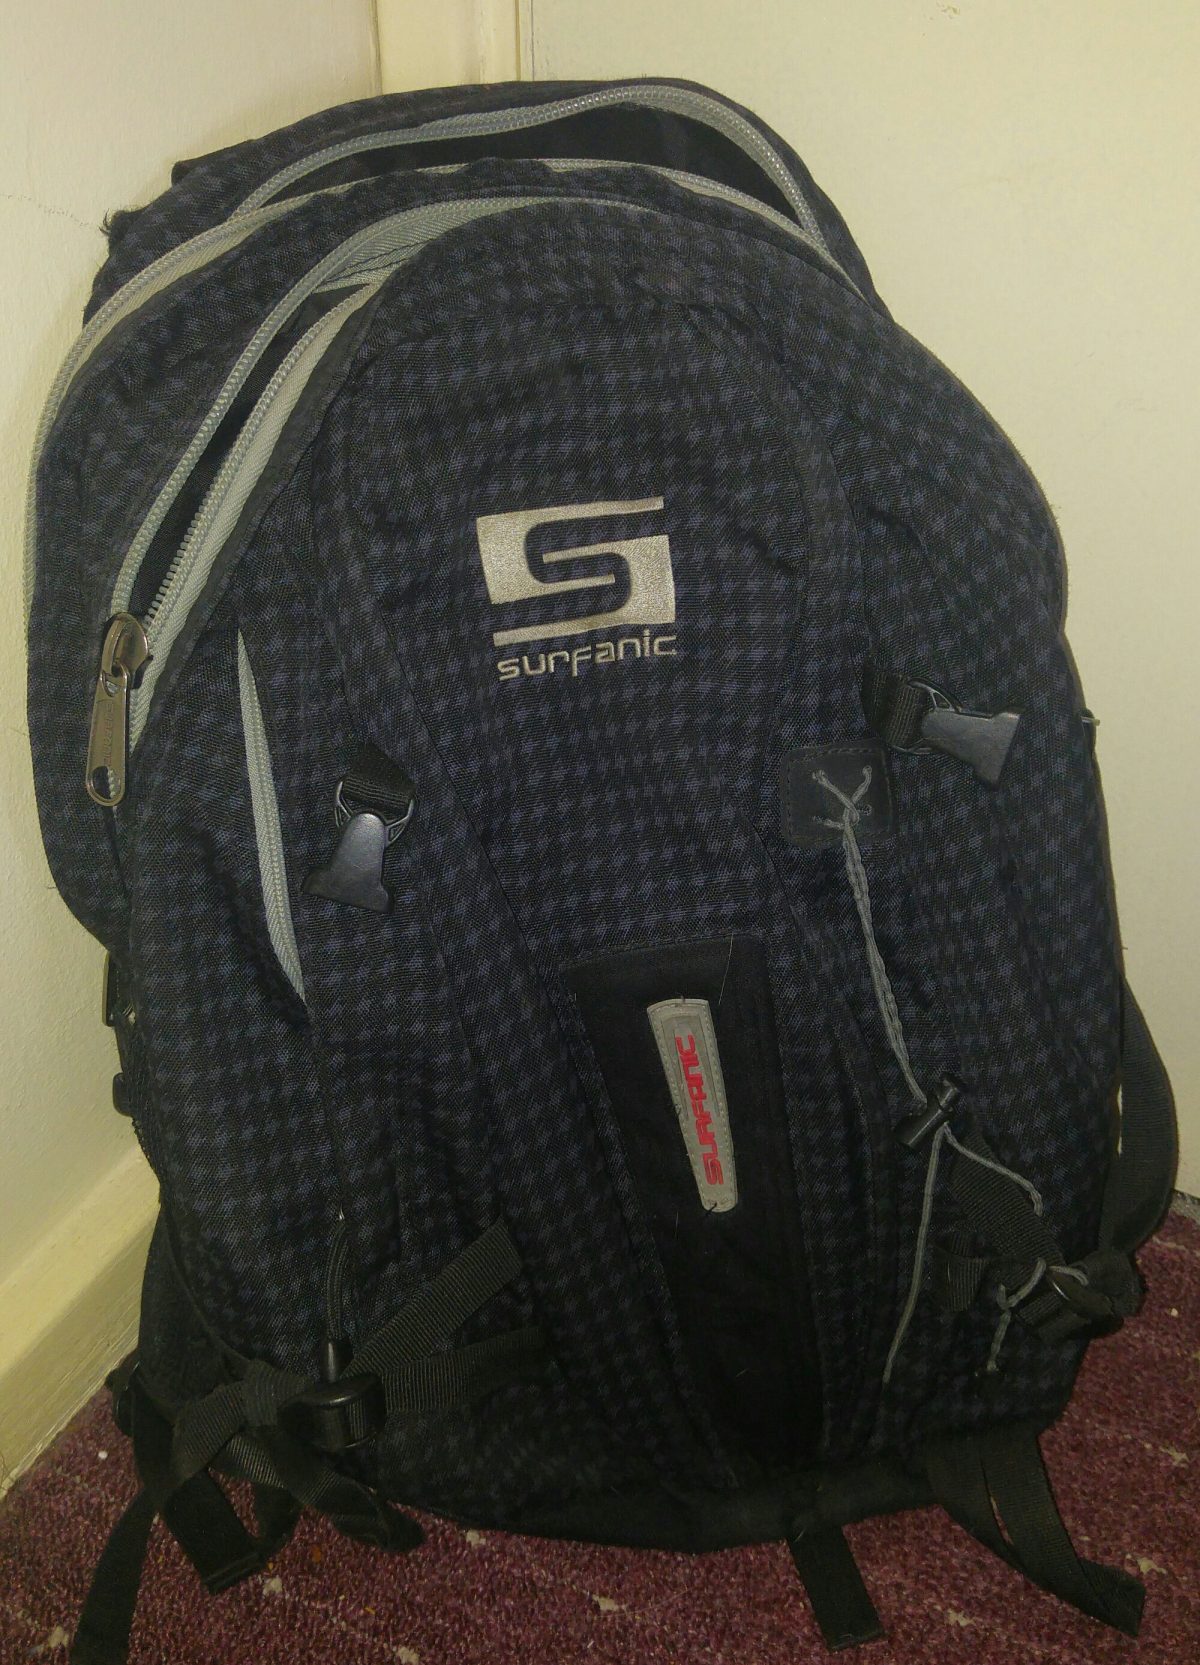 Surfanic backpack